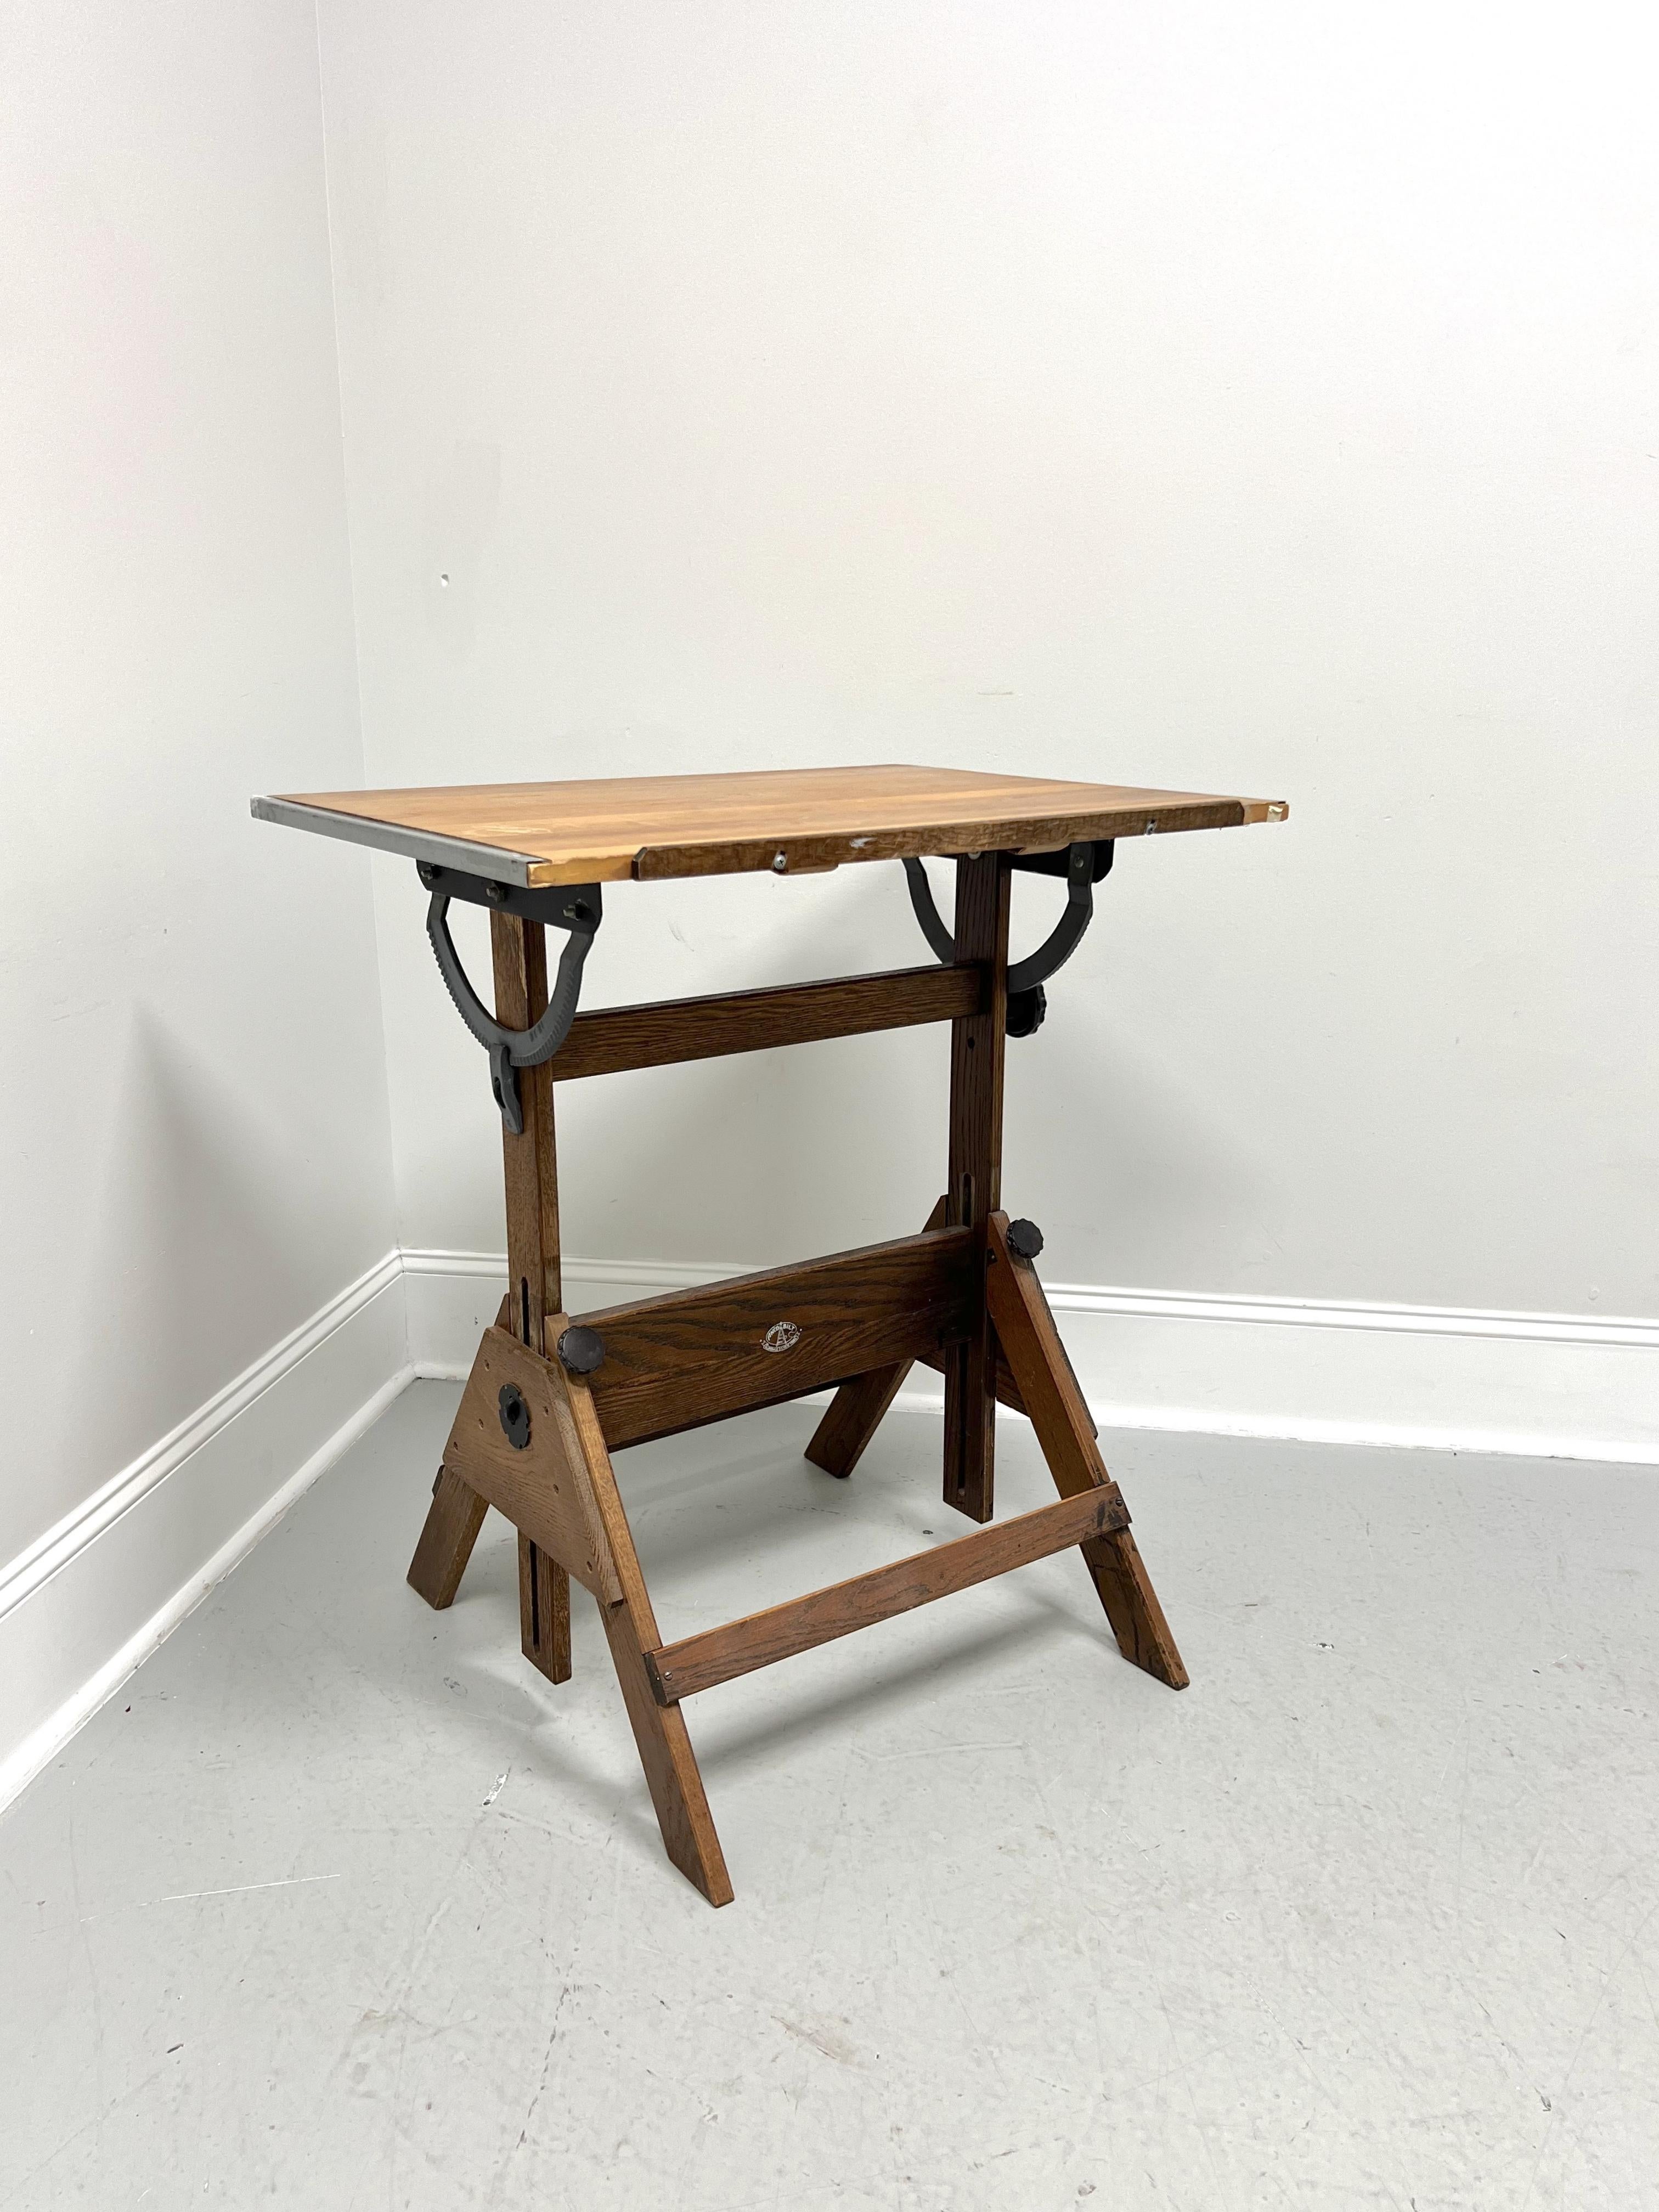 A Mid 20 Century MCM drafting table by Anco Bilt. Oak & pine woods, metal mechanisms, adjustable tilt-top, adjustable height, and 